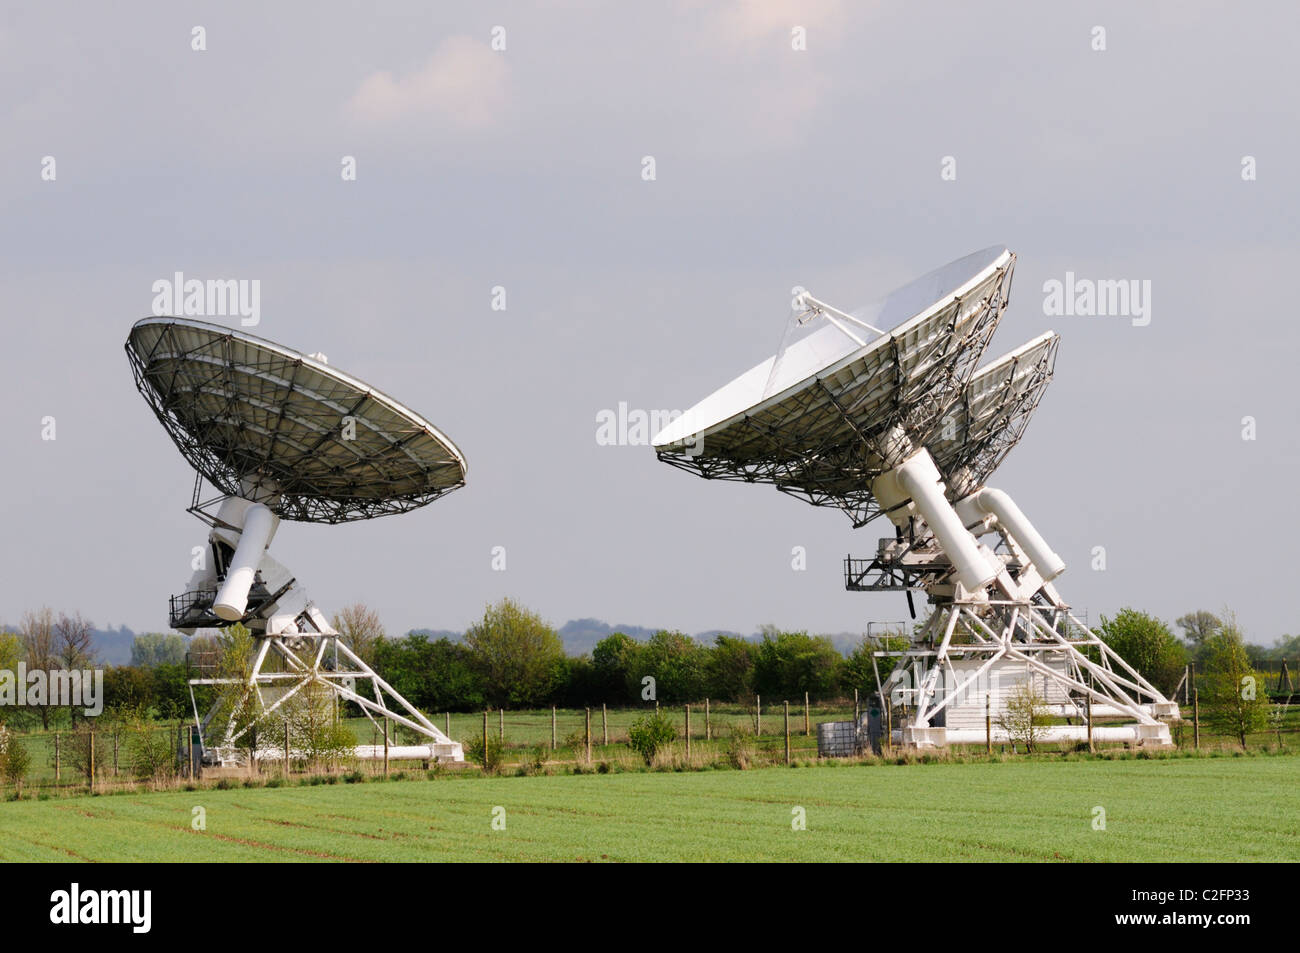 Les télescopes radio à l'Observatoire de Radioastronomie Mullard, Lord's Bridge, Barton, Cambridgeshire, Angleterre, RU Banque D'Images